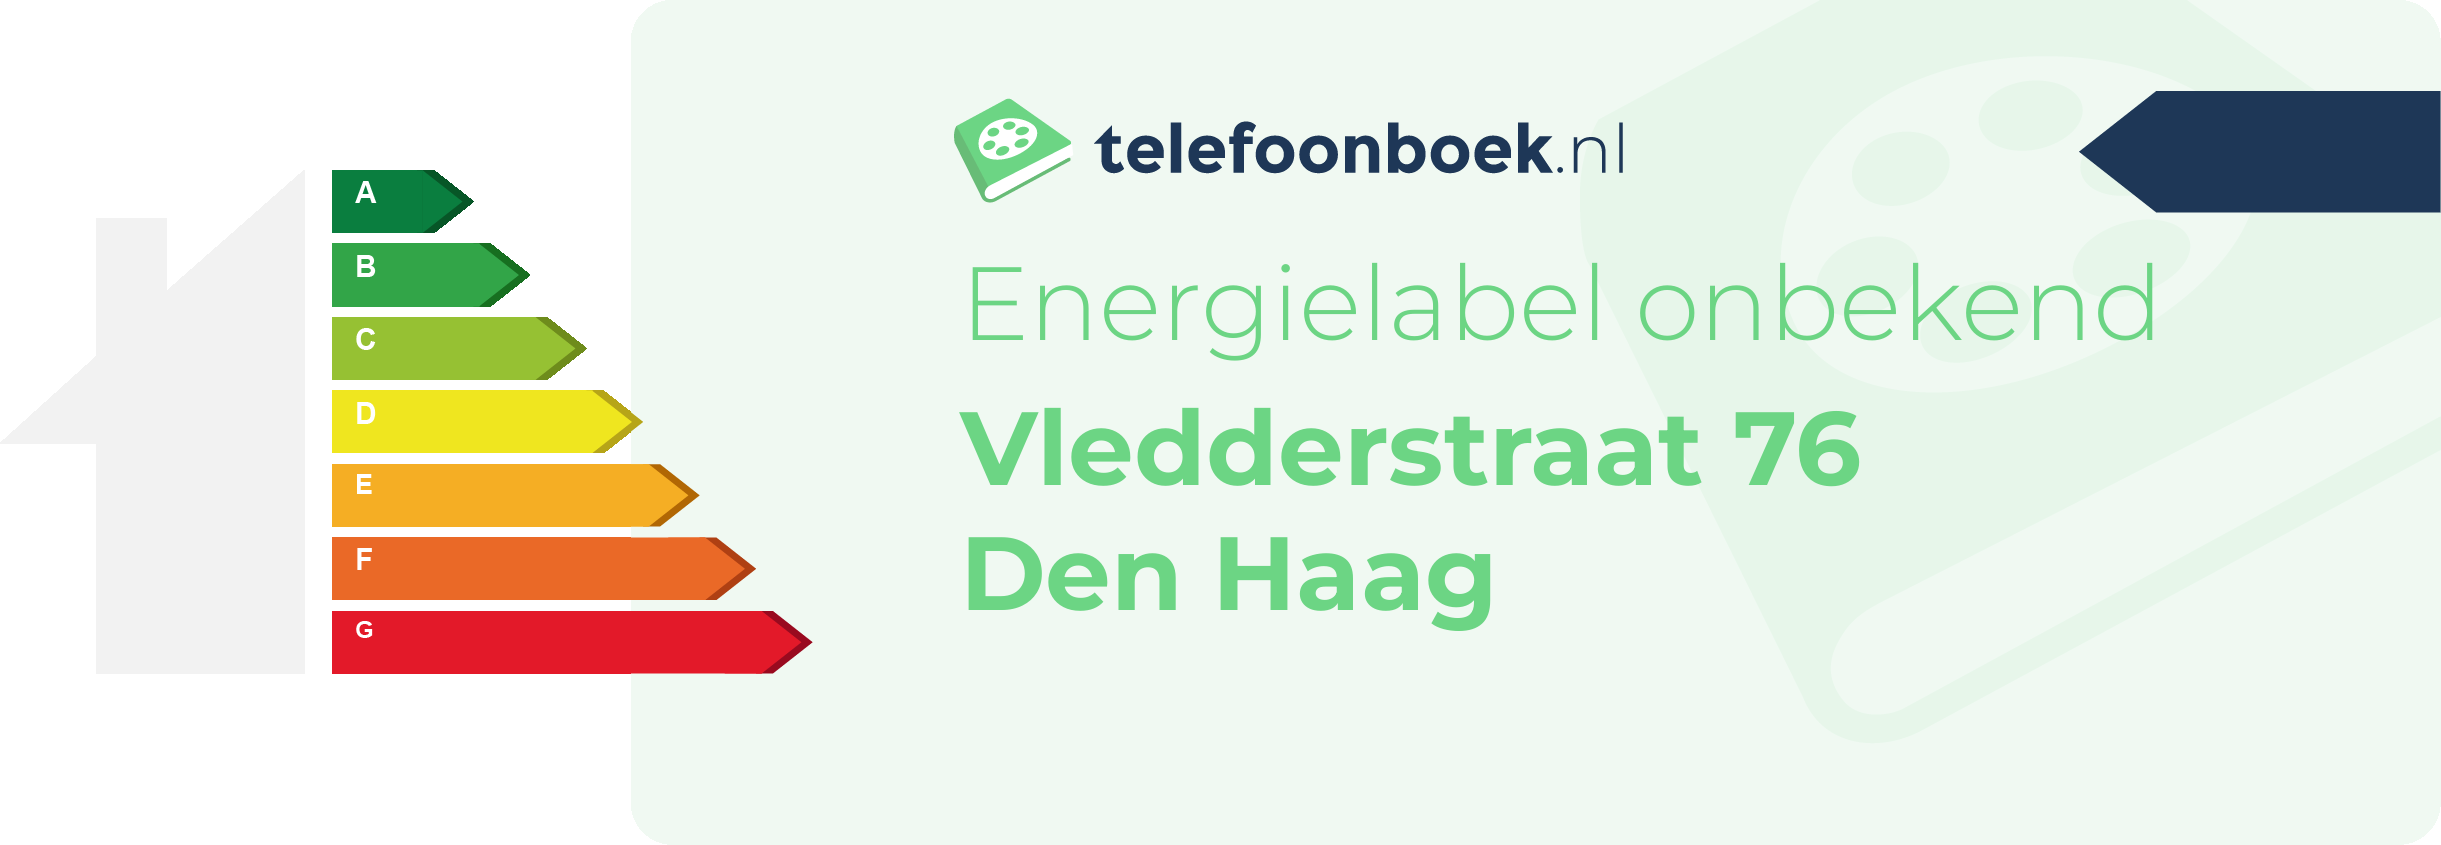 Energielabel Vledderstraat 76 Den Haag